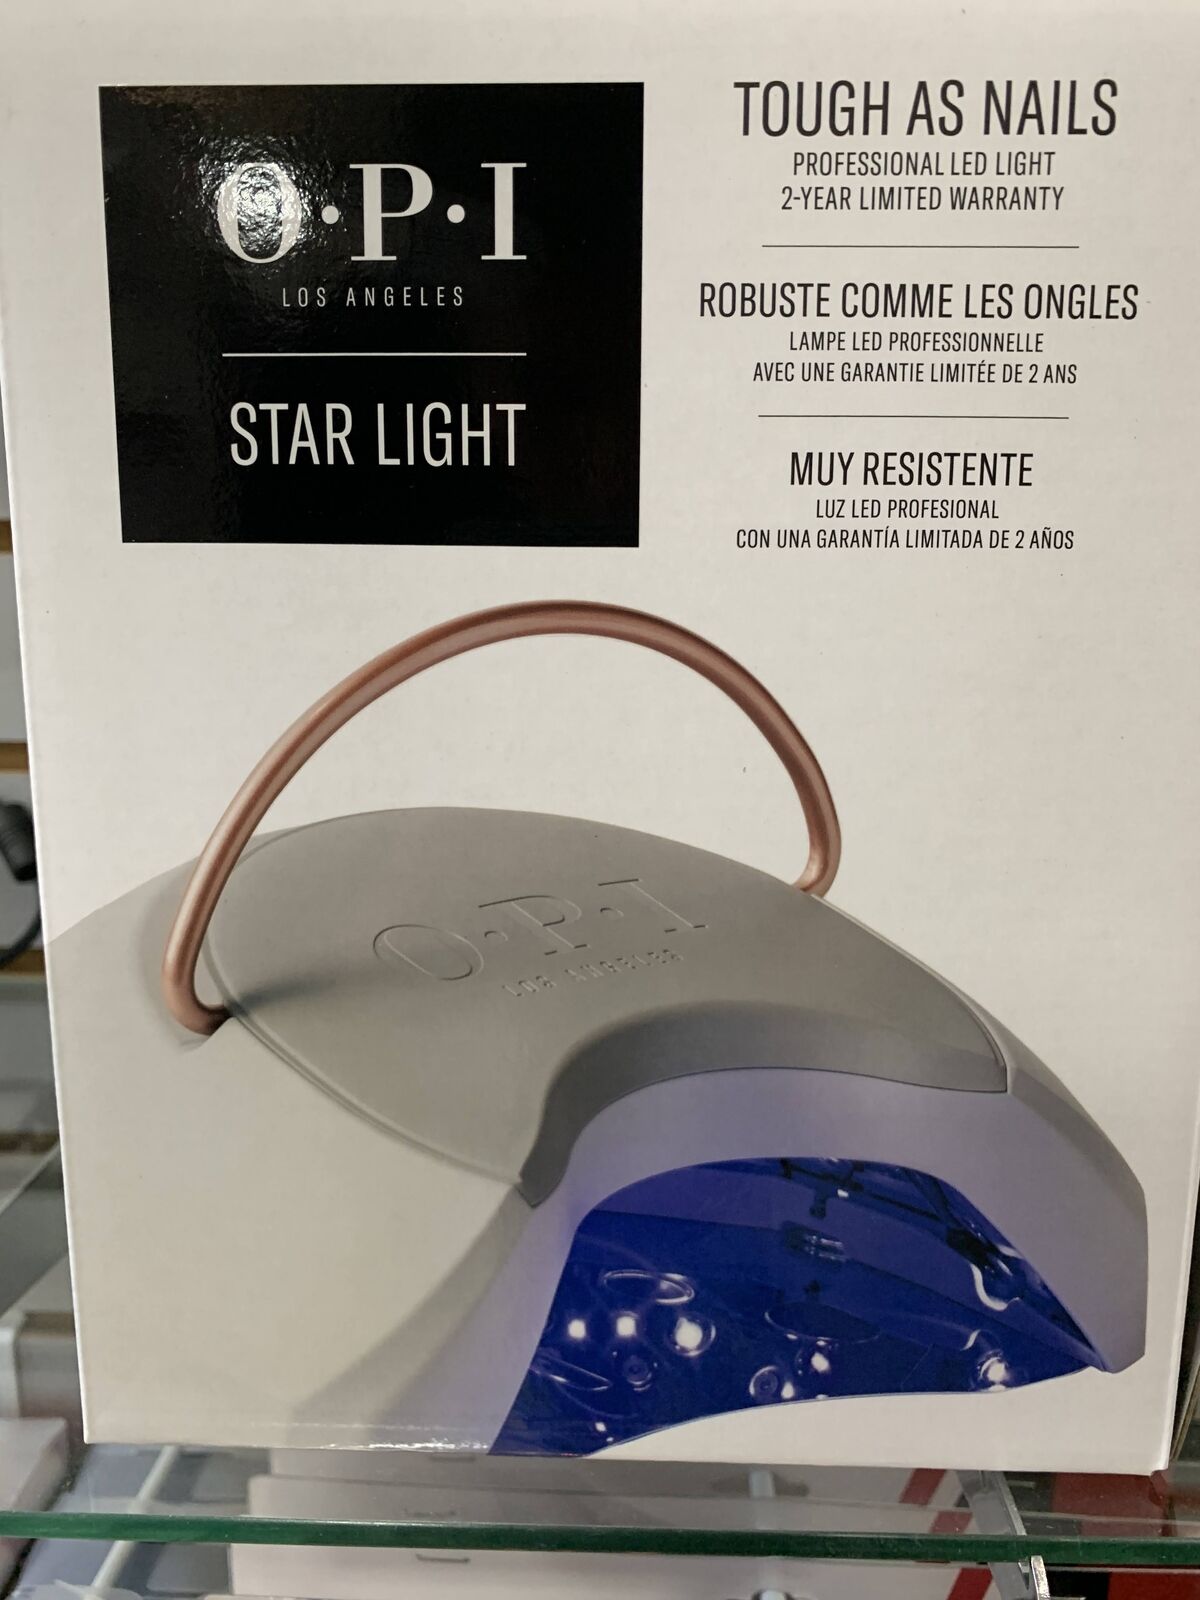 GL903 - OPI Star Light LED Light Professional Nail Gel Corded Lamp, Solar  Nails Warehouse